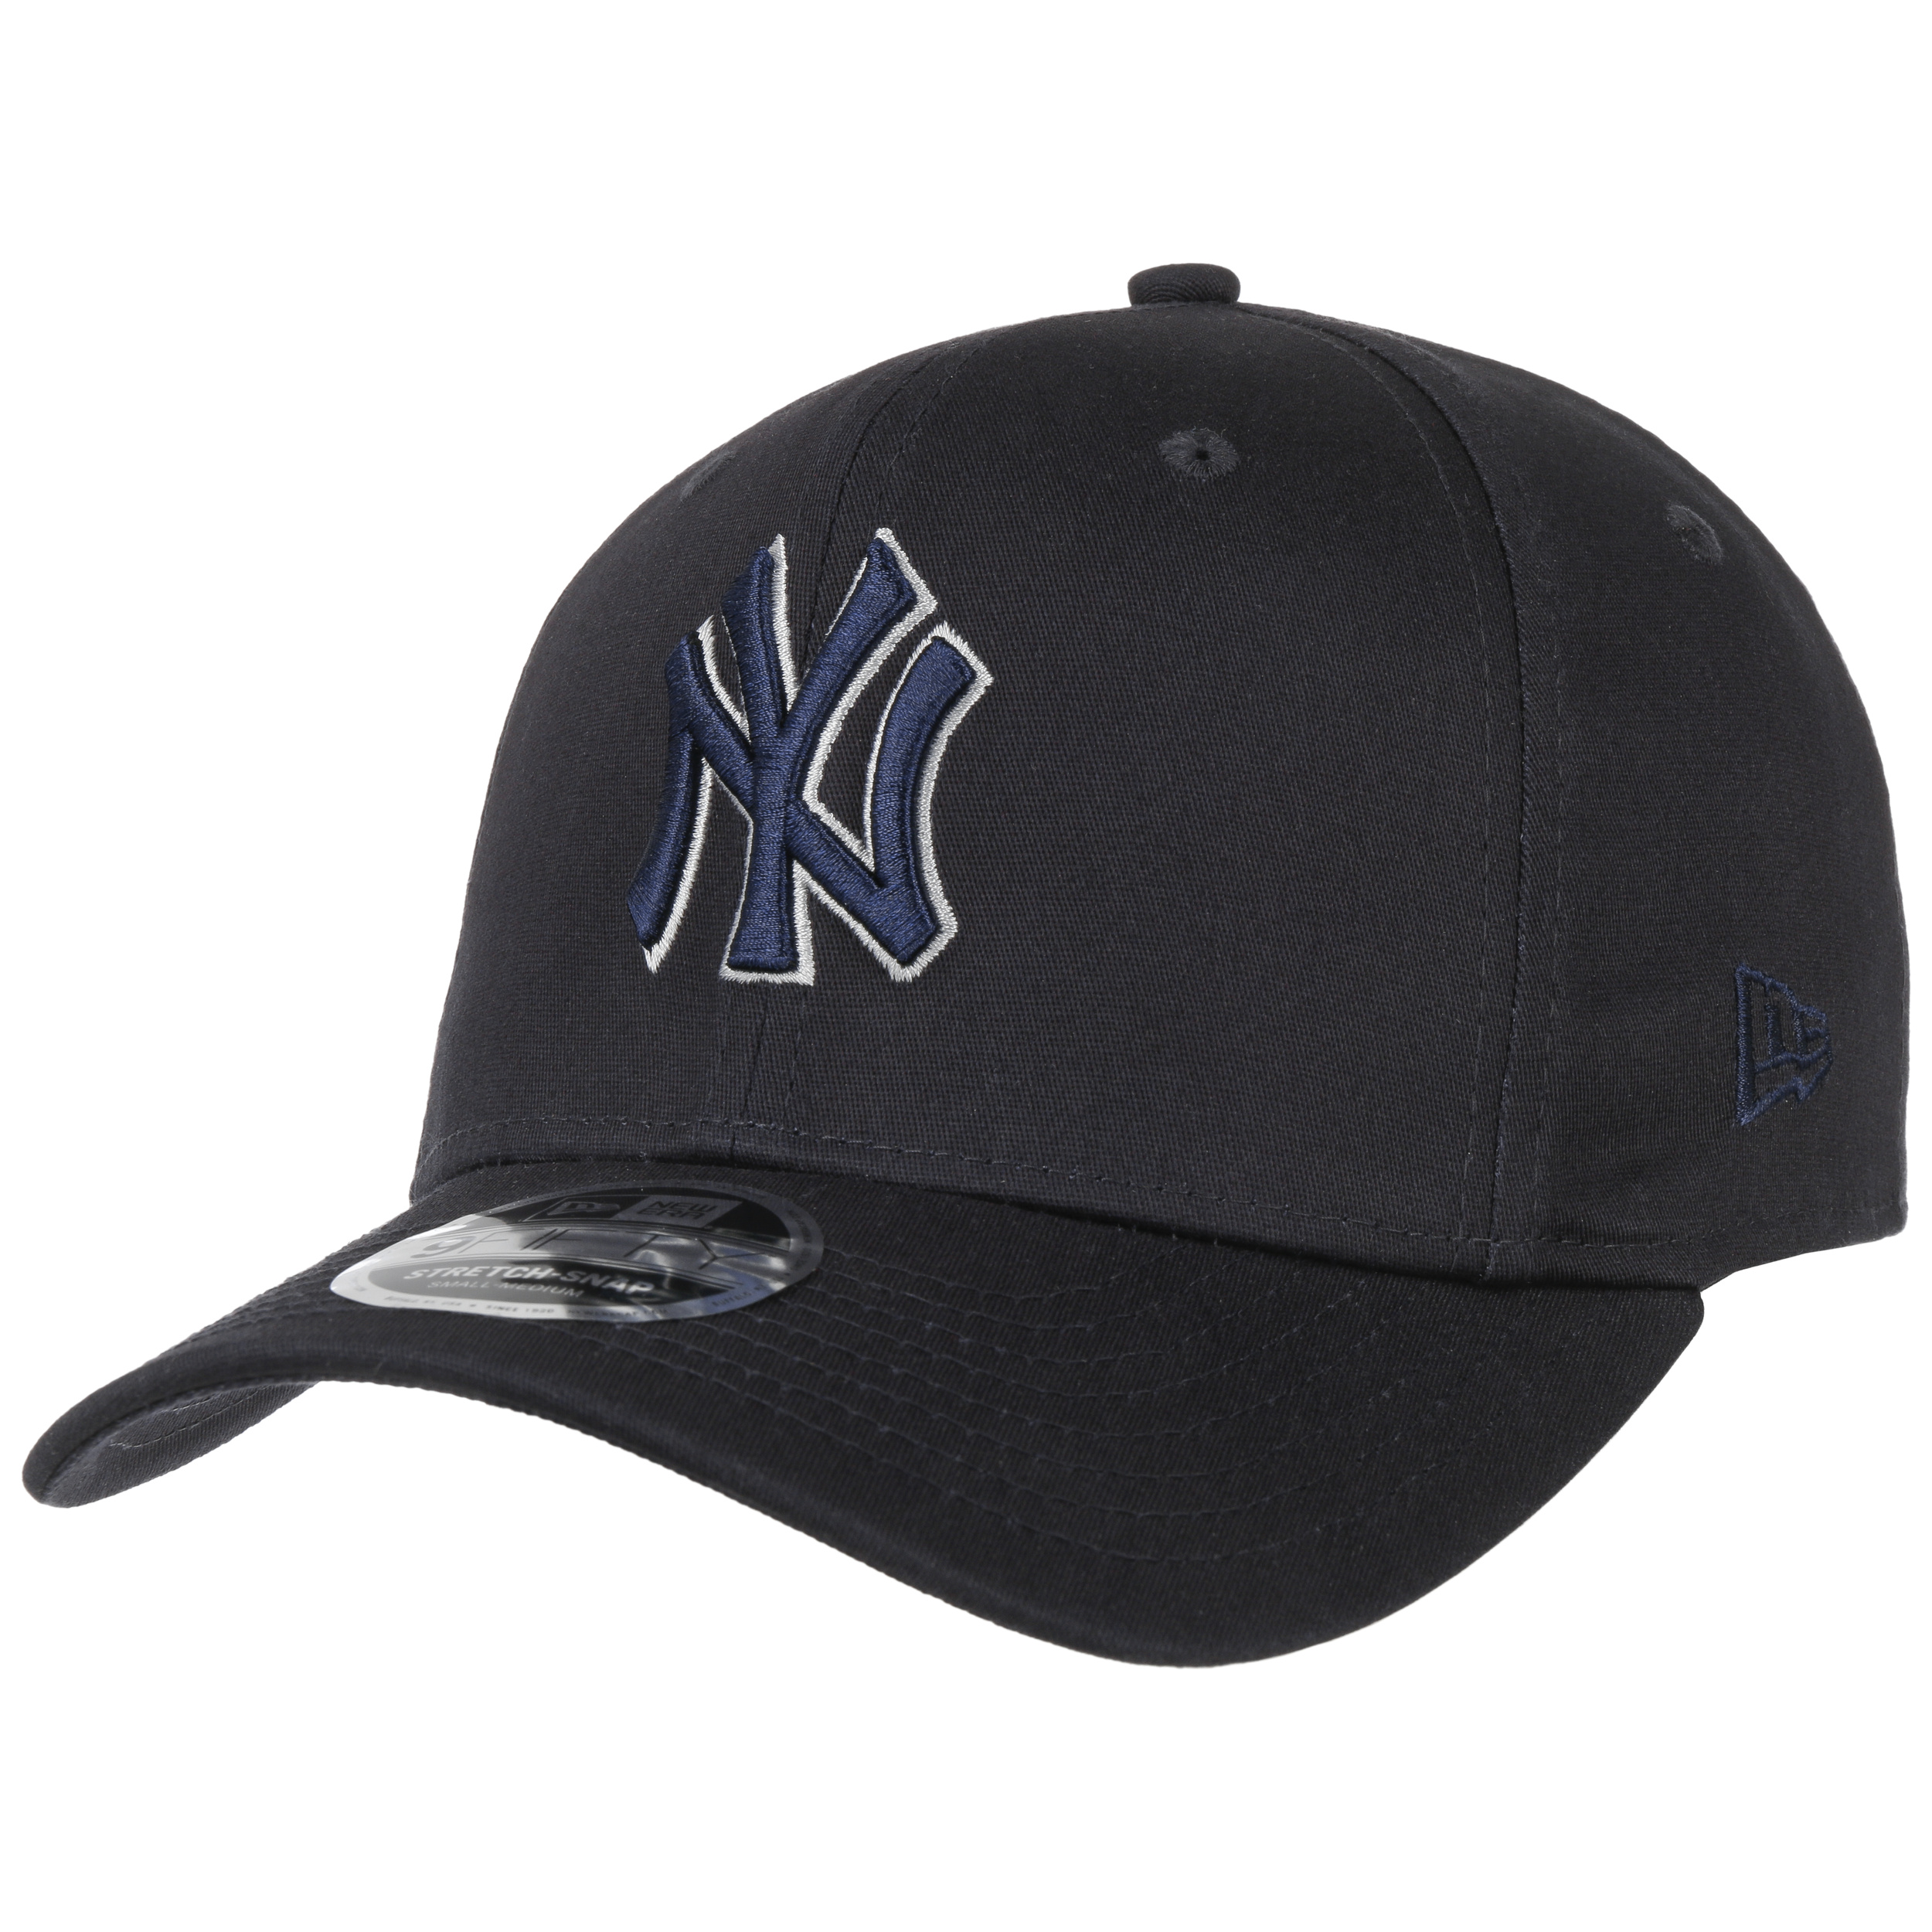 S/M New Era 9Fifty Stretch Snapback Cap New York Yankees 